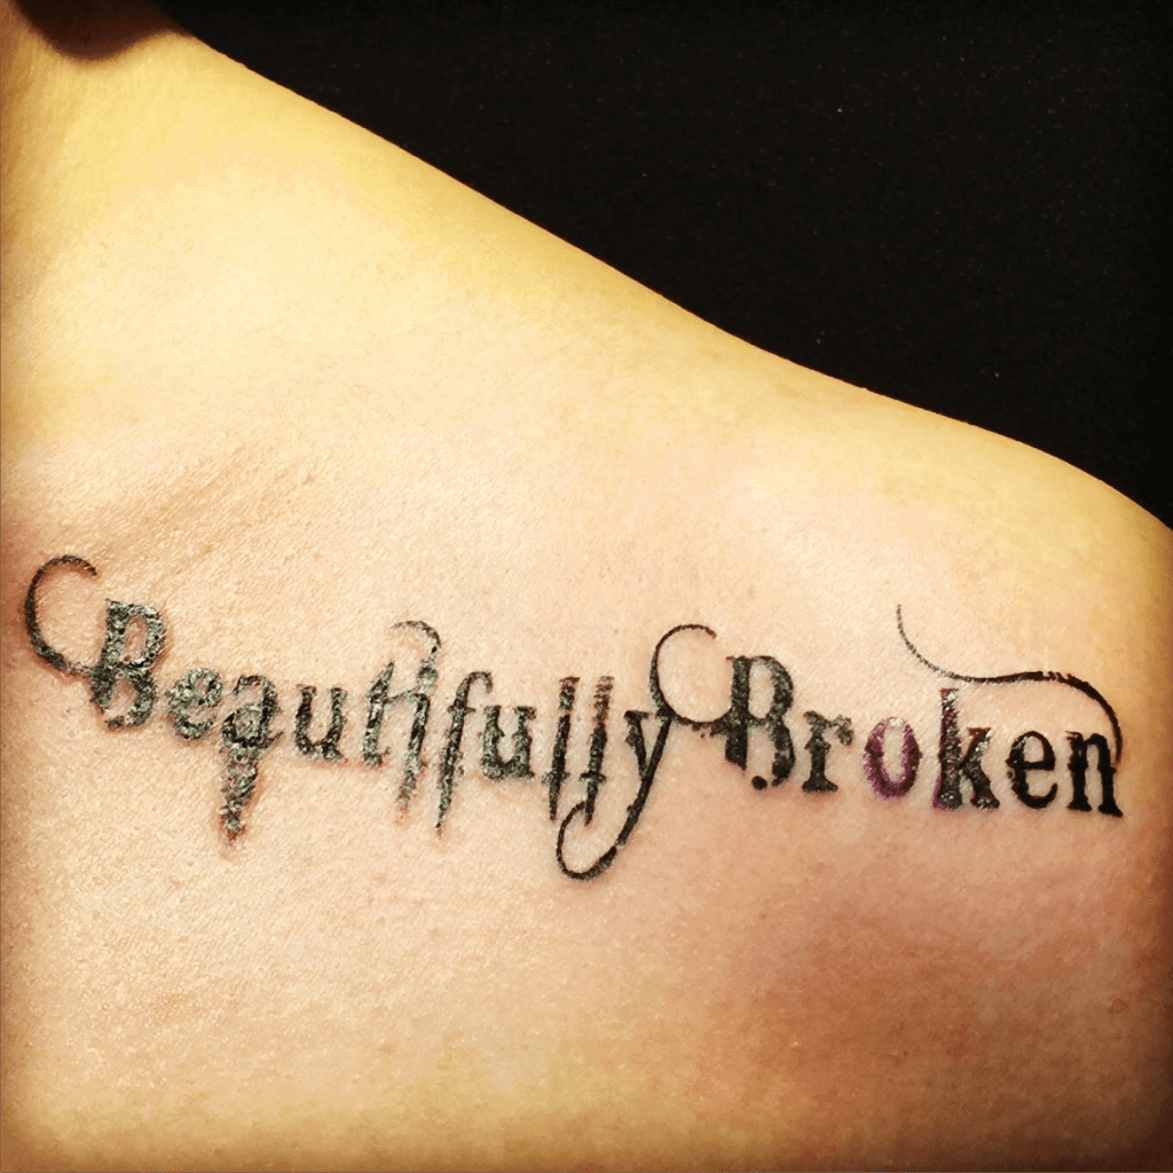 Beautifully Broken Wrist Tattoo